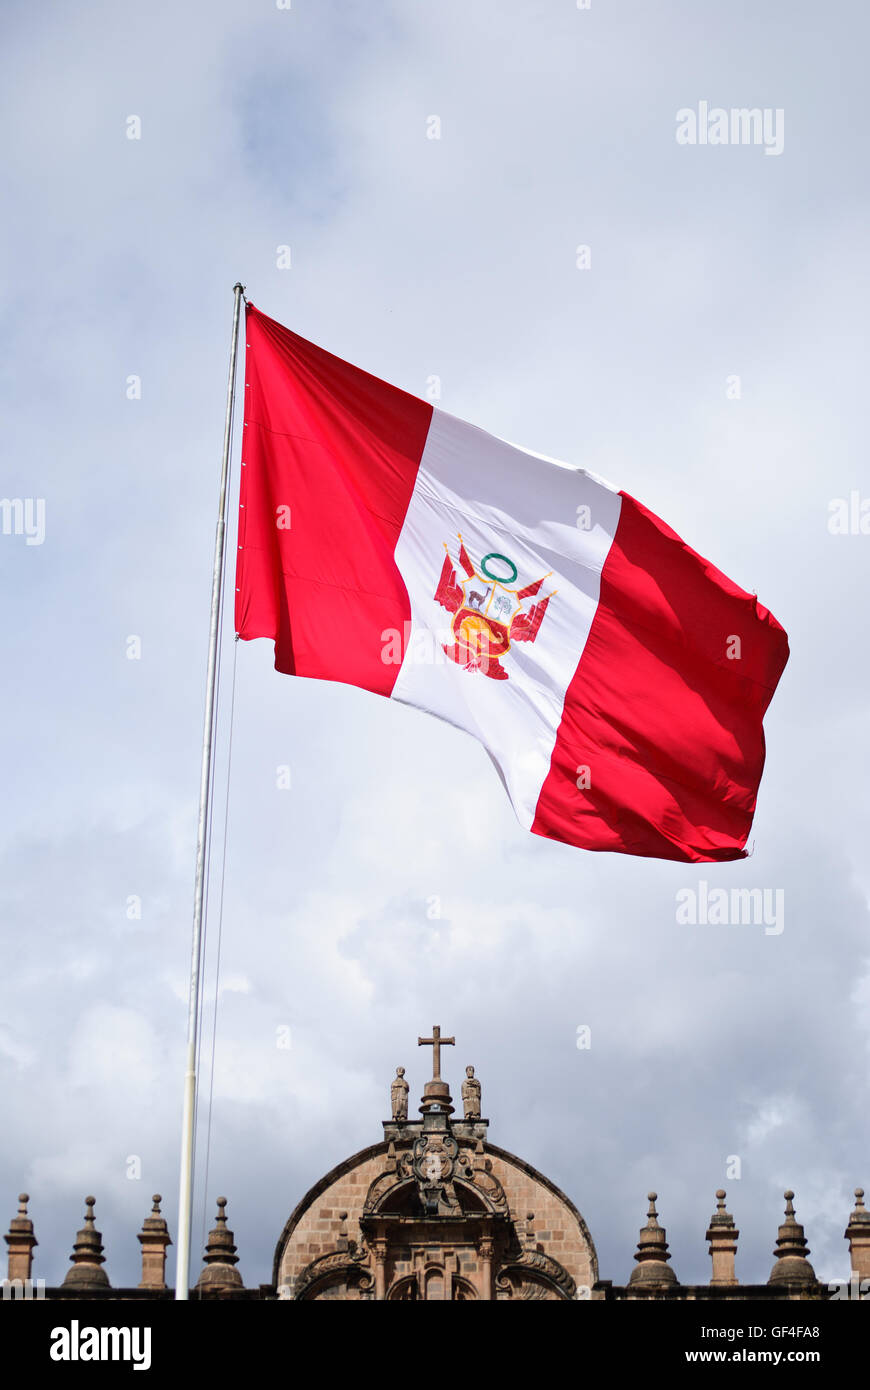 The flag of Peru, national flag, at the Plaza de Armas Stock Photo